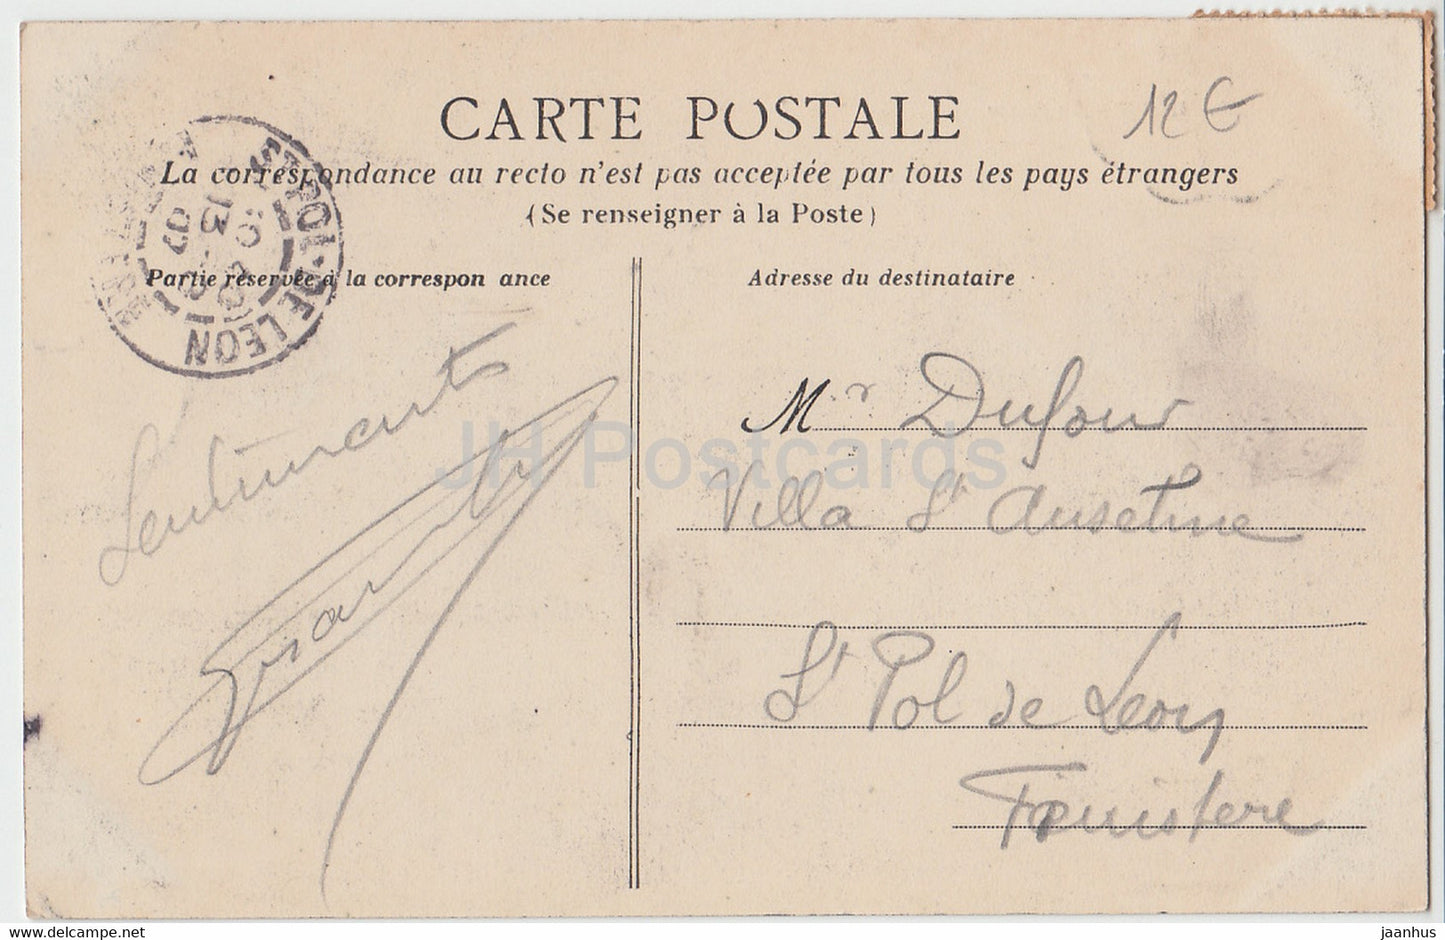 Brest - La Saône - navire - carte postale ancienne - 1907 - France - occasion